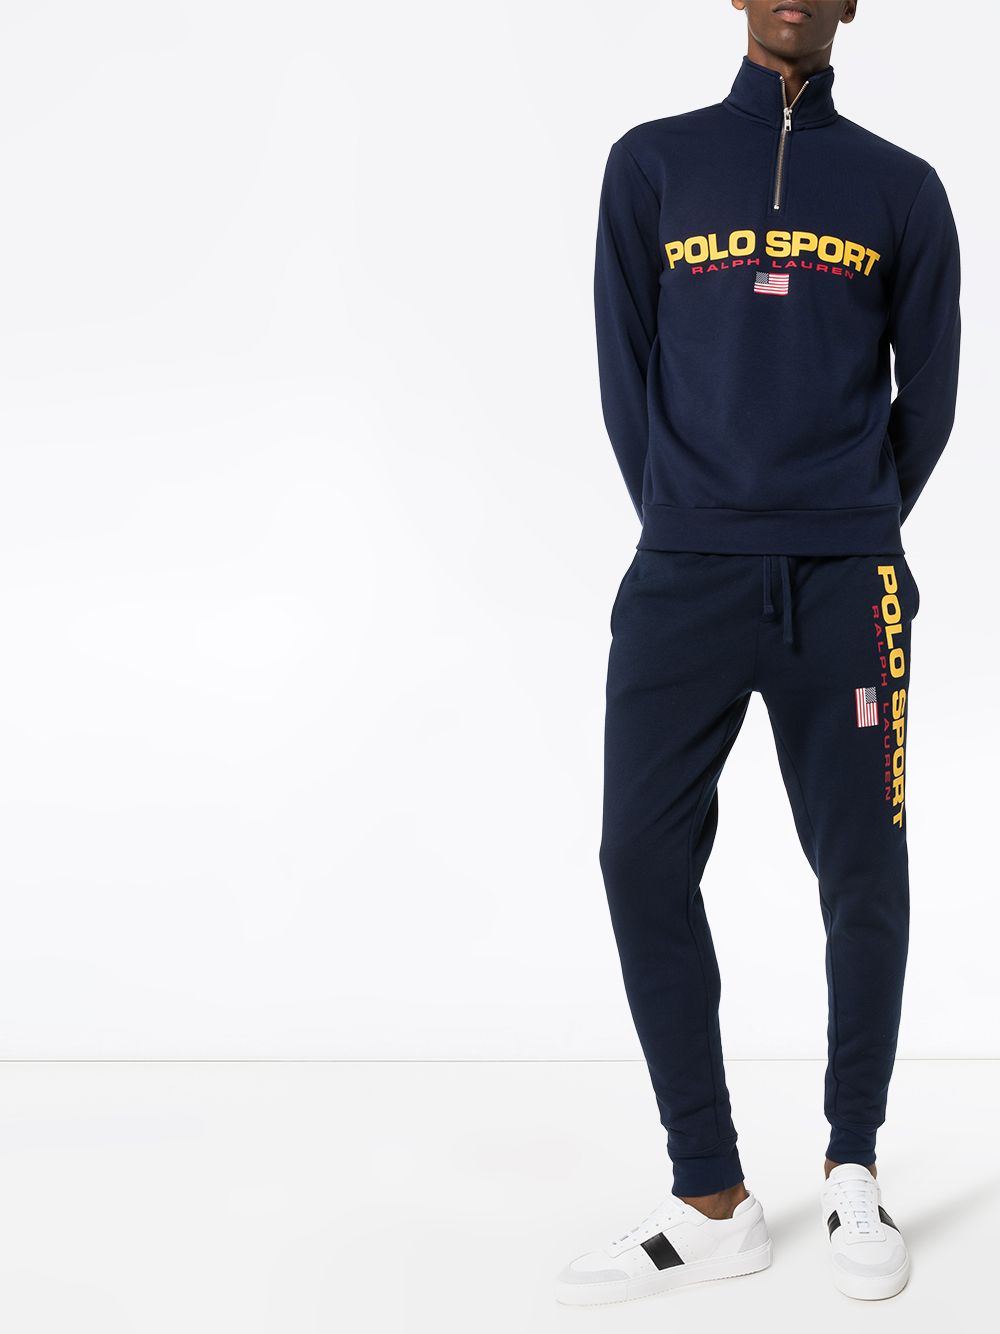 фото Polo ralph lauren спортивные брюки с логотипом